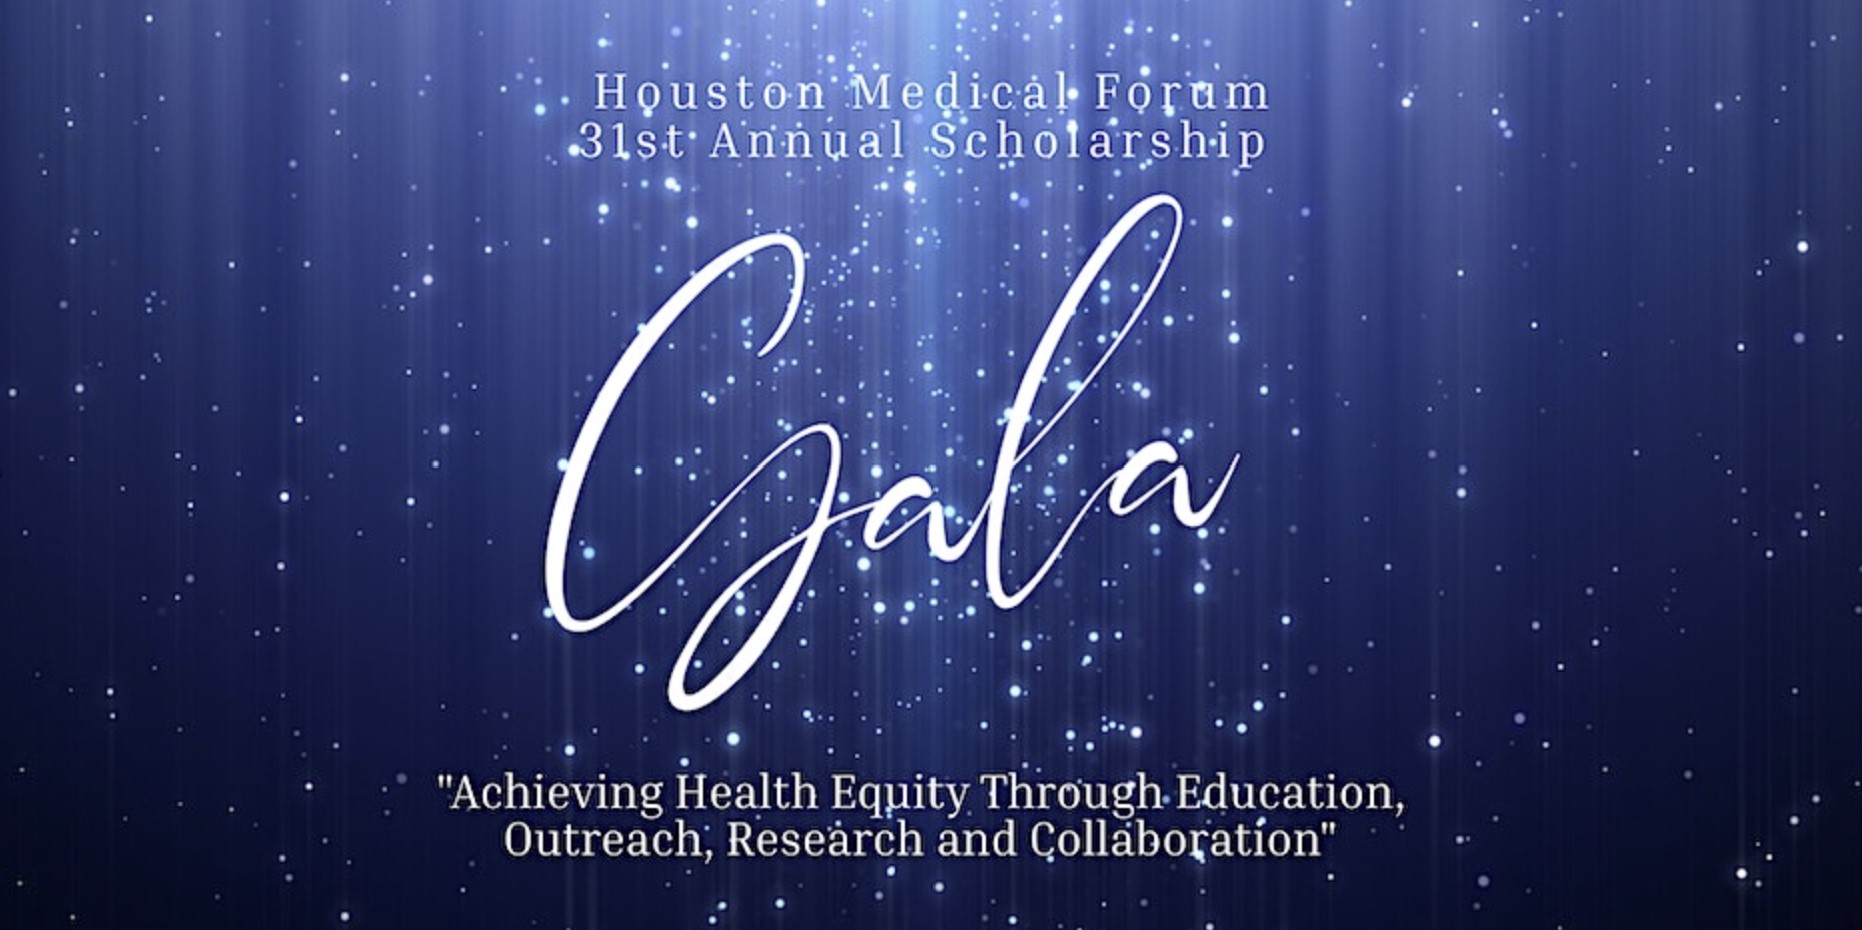 HMF 31st Annual Scholarship Gala